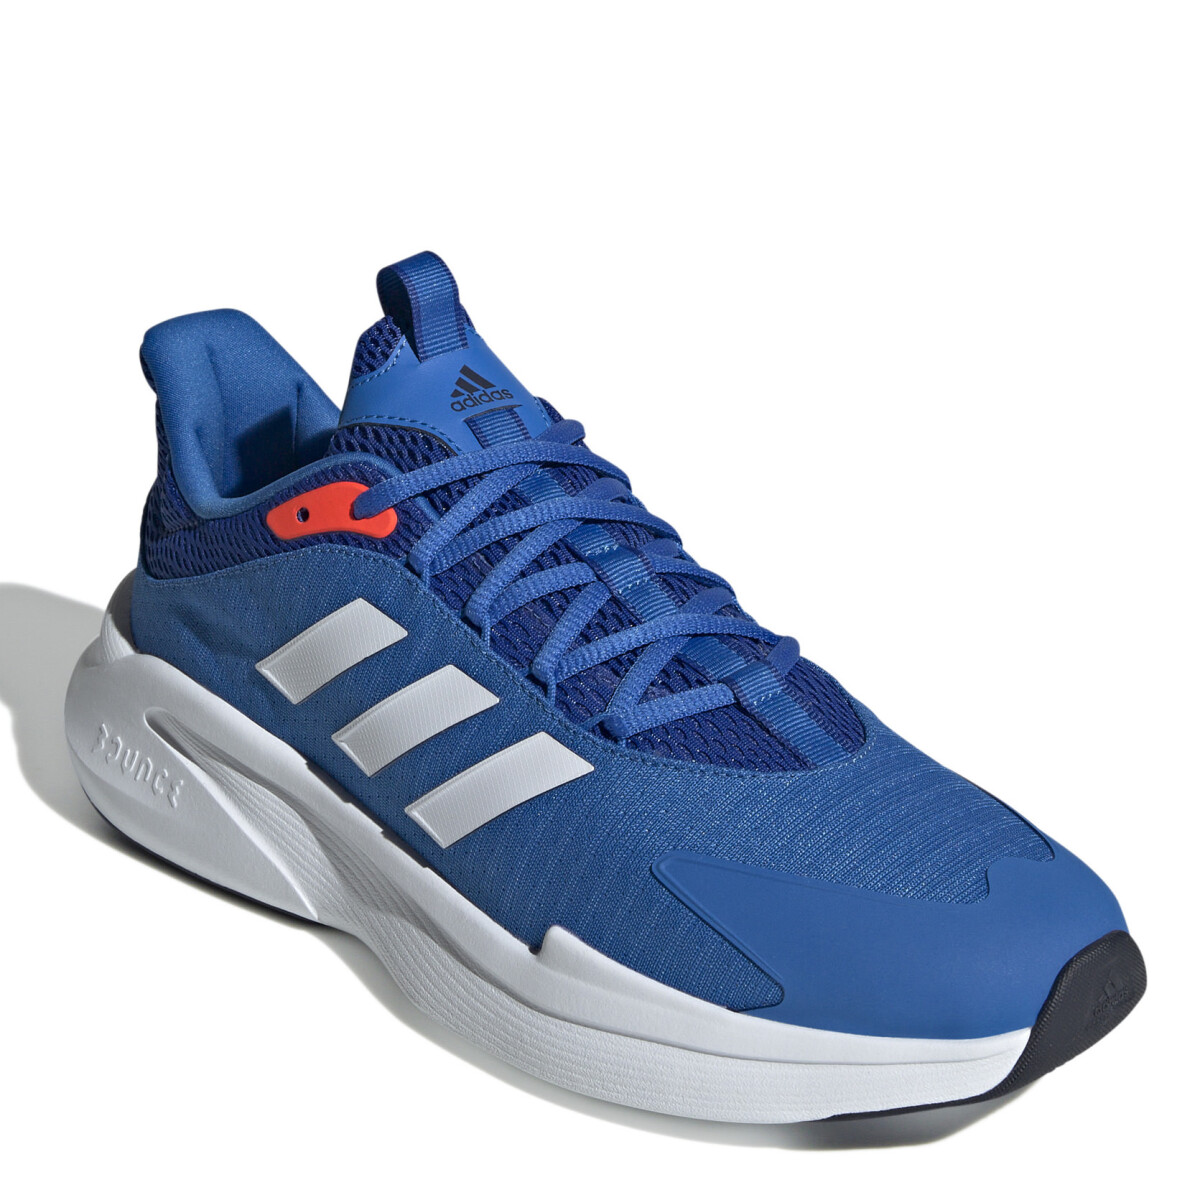 Alphaedge + Mns Adidas - Azul/Royal/Blanco 